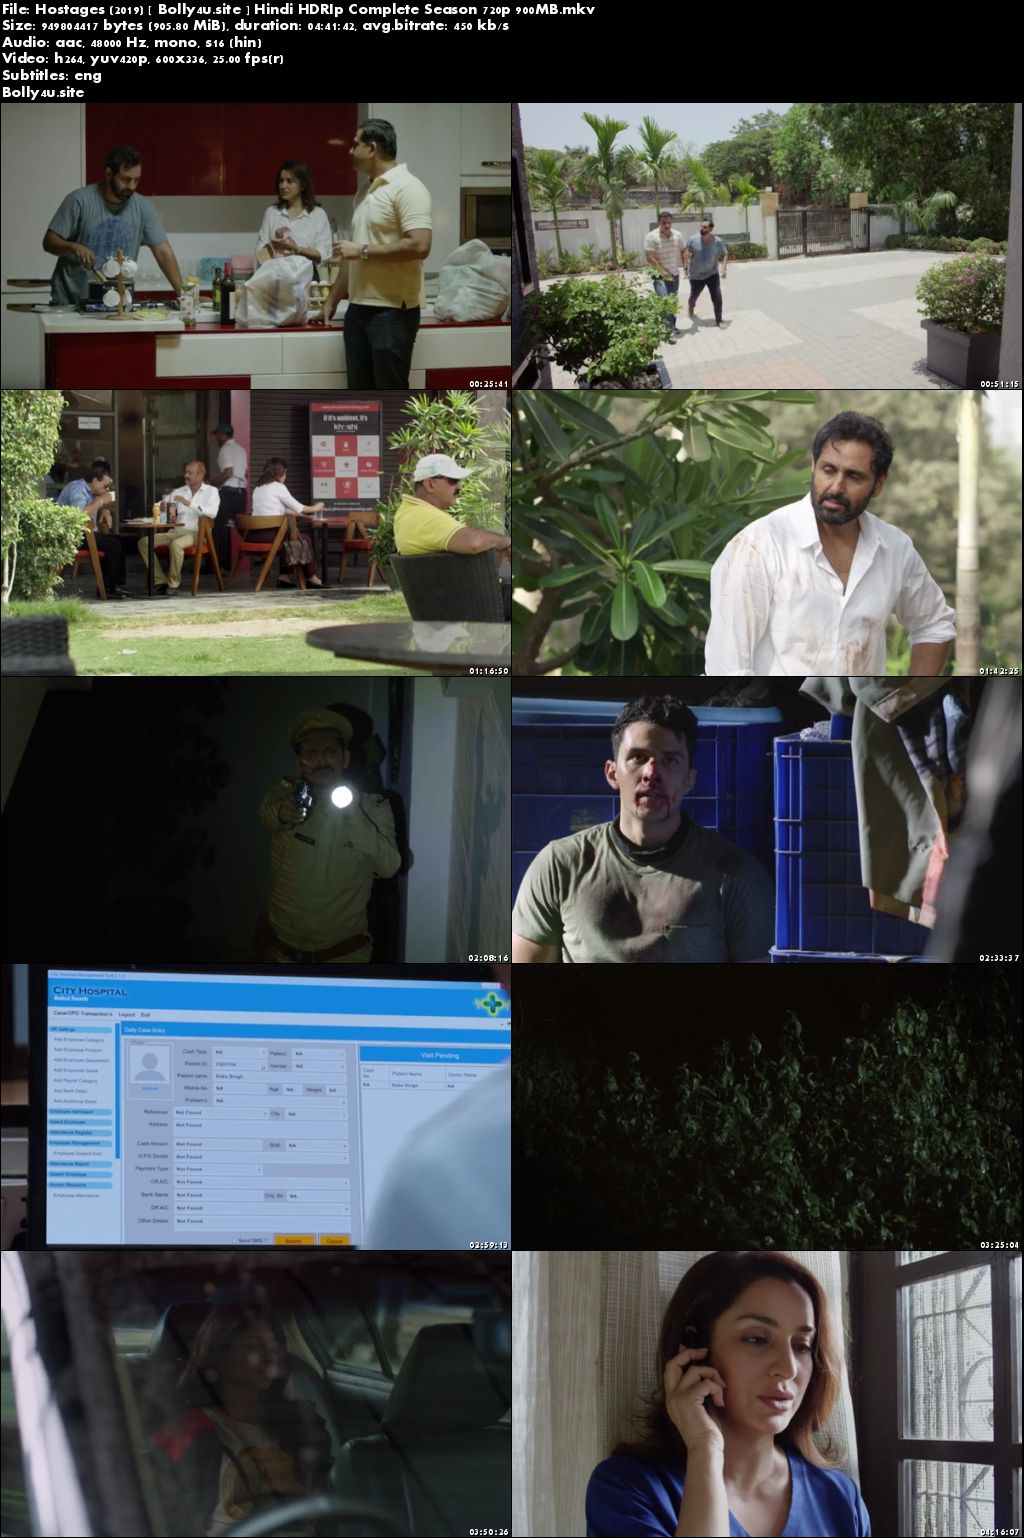 Hostages 2019 HDRip 900MB Hindi Complete Season S01 480p ESub Download